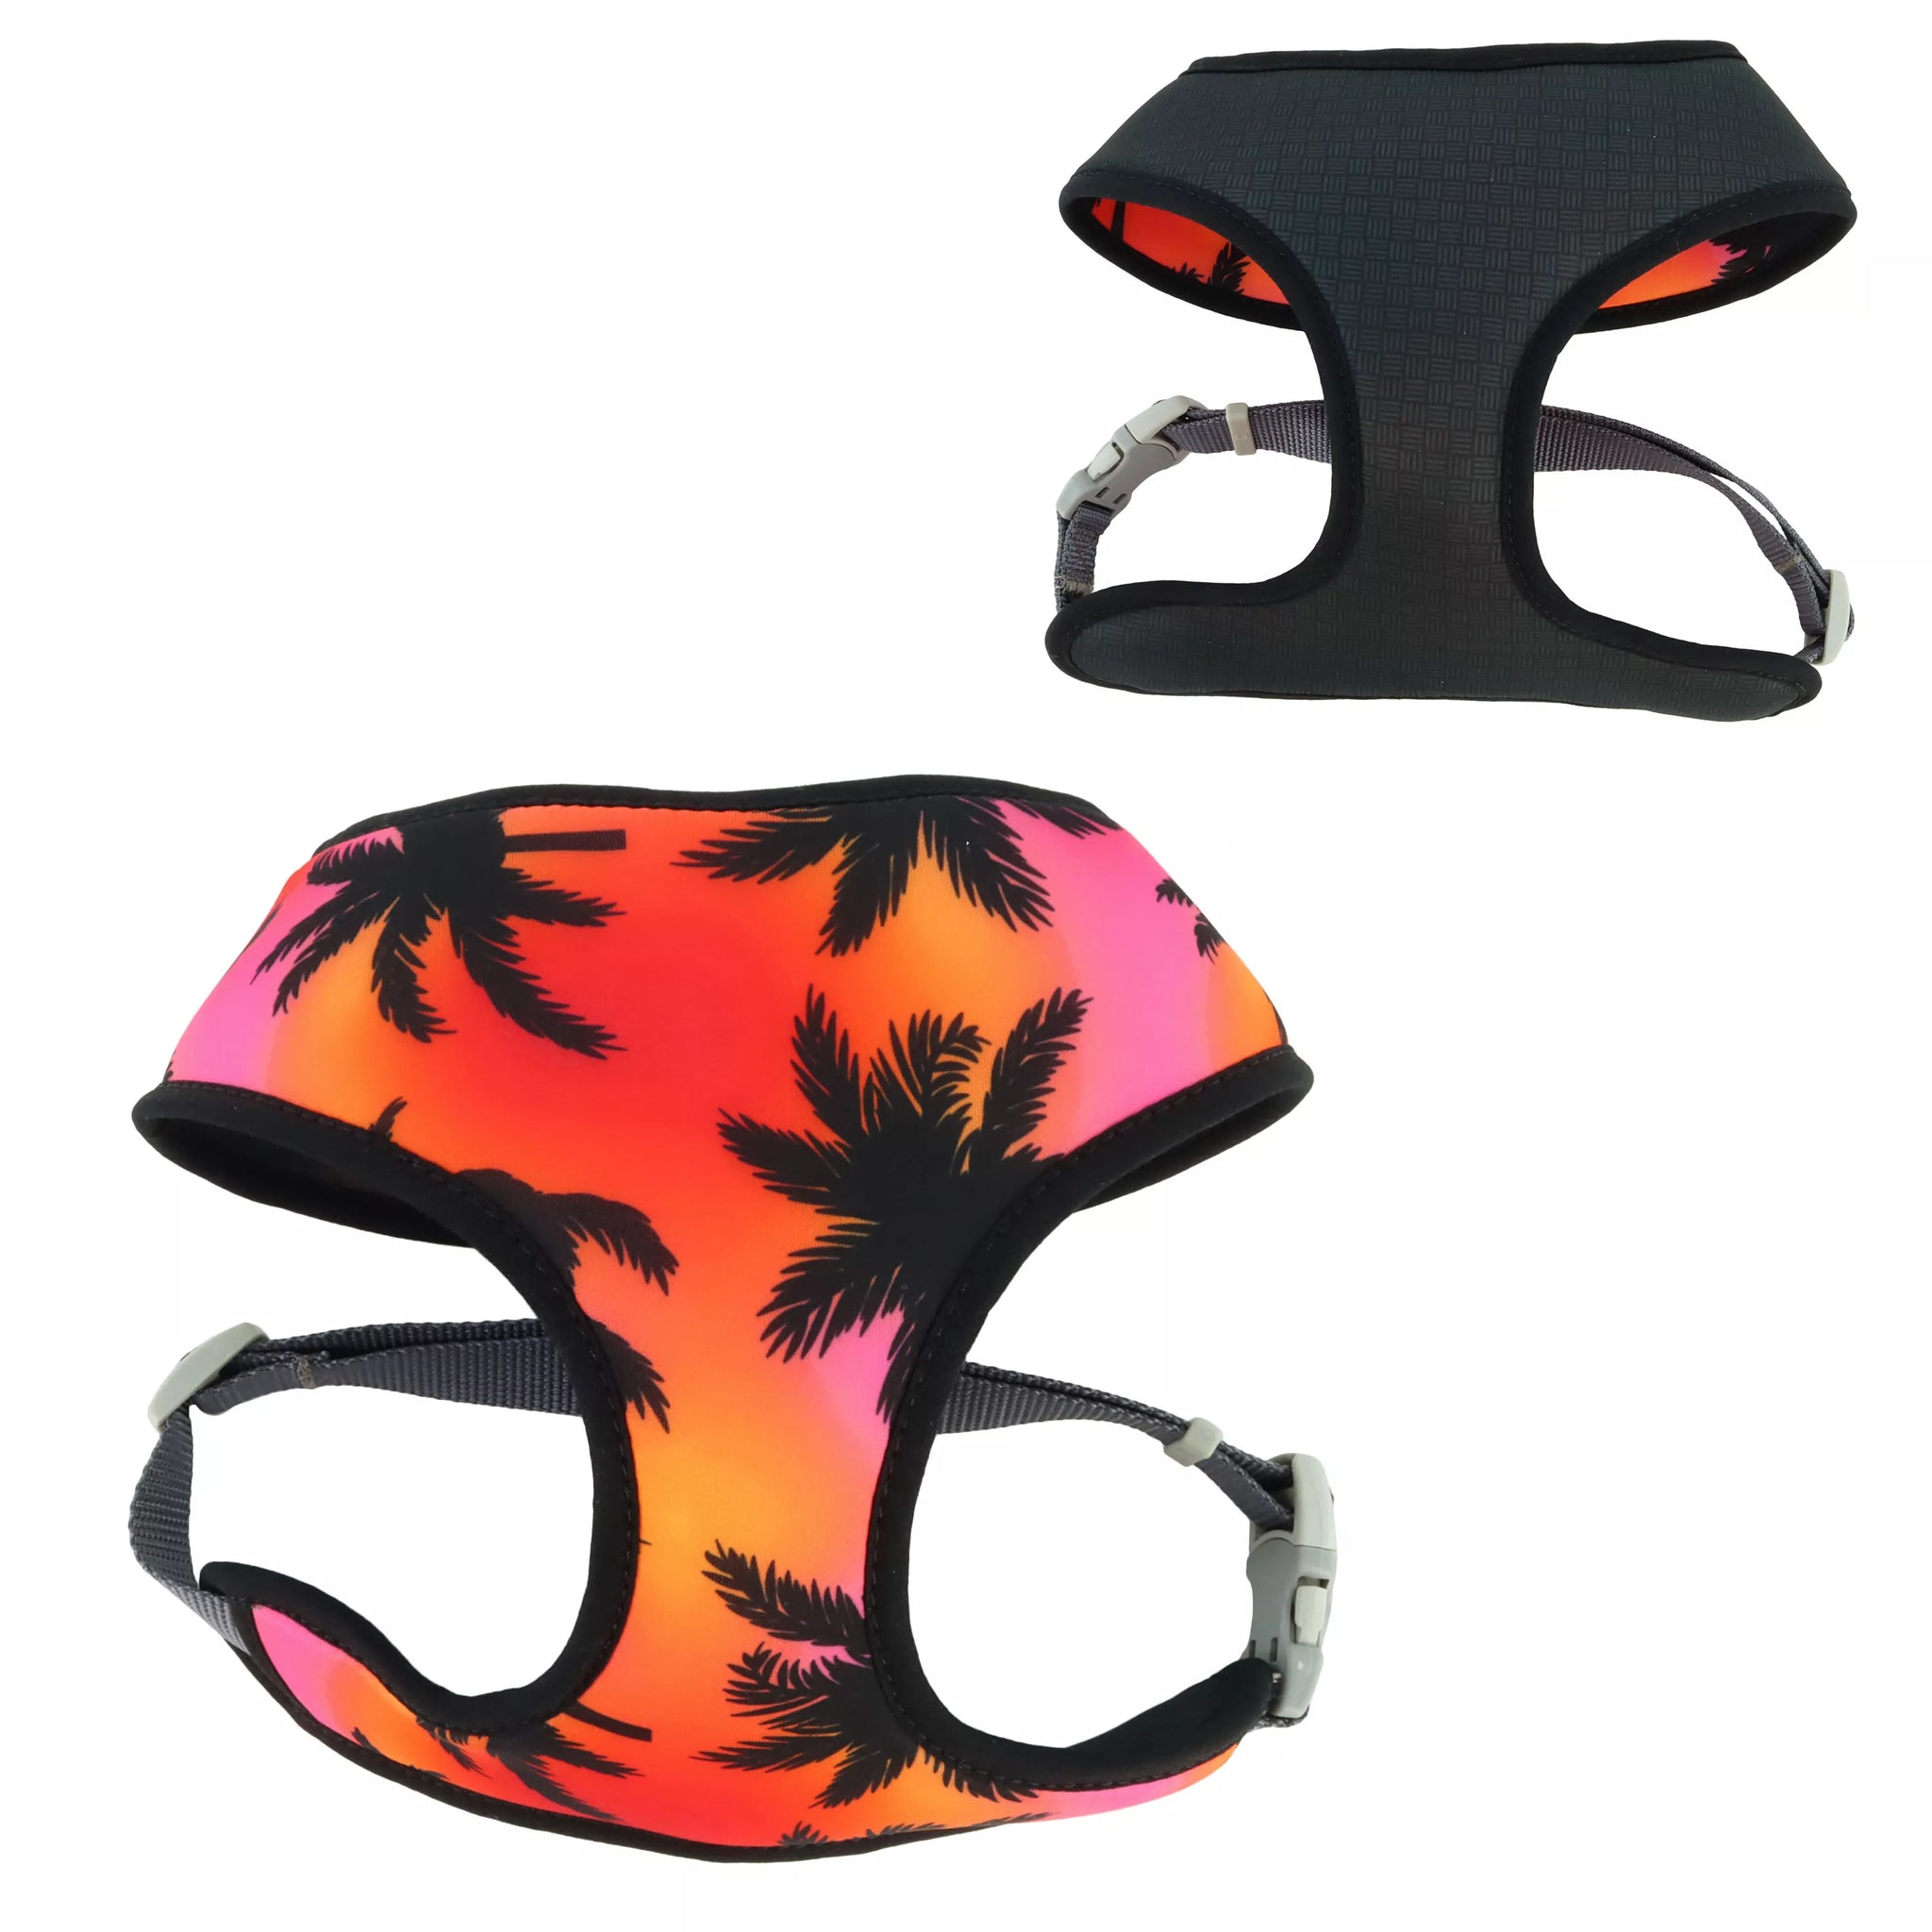 Coastal Sublime Adjustable Dog Harness - Sunset Palms with Black